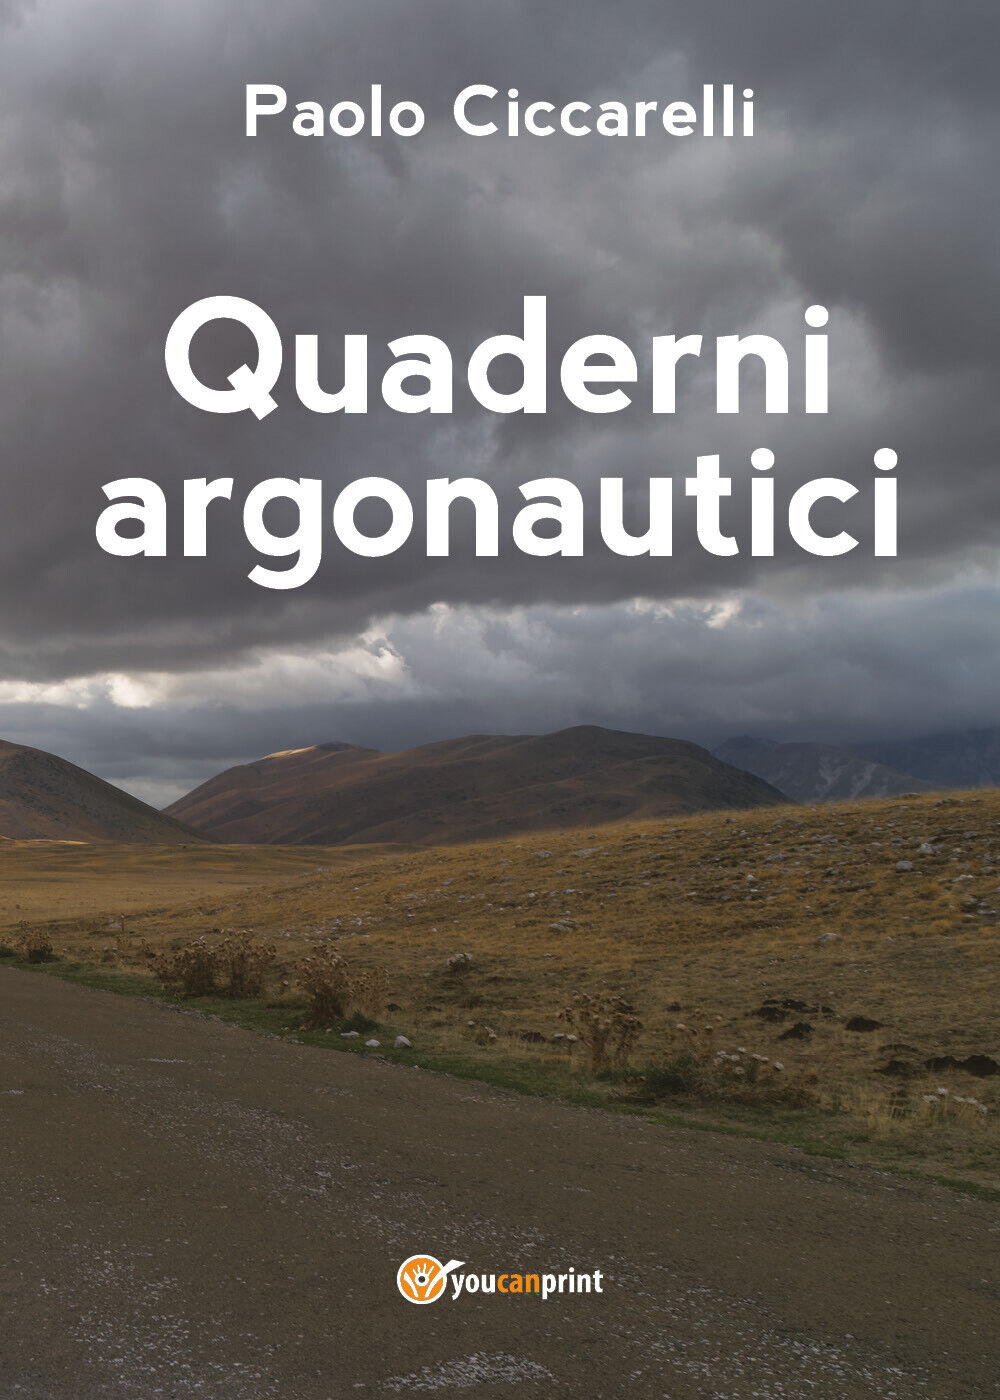 Quaderni argonautici  di Paolo Ciccarelli,  2018,  Youcanprint